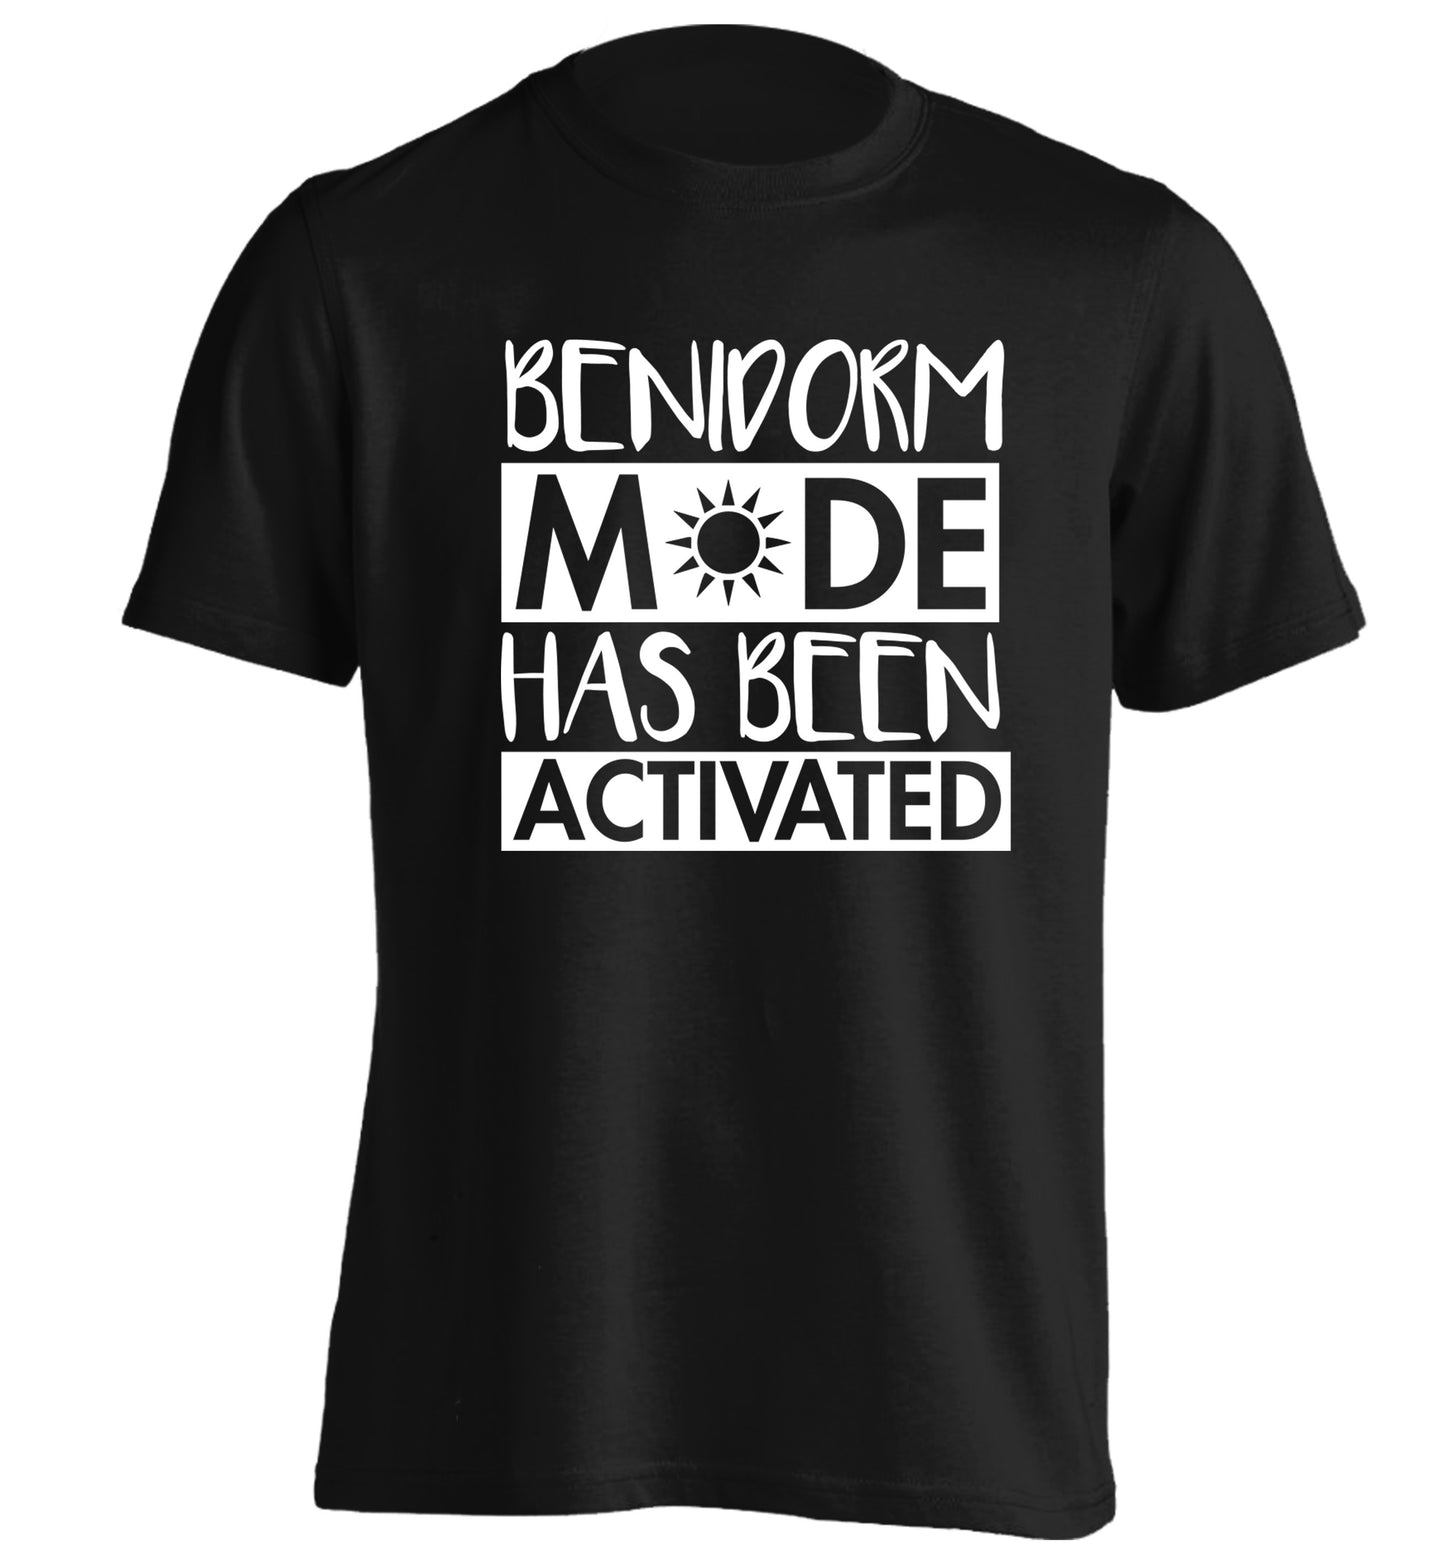 Benidorm mode has been activated adults unisex black Tshirt 2XL